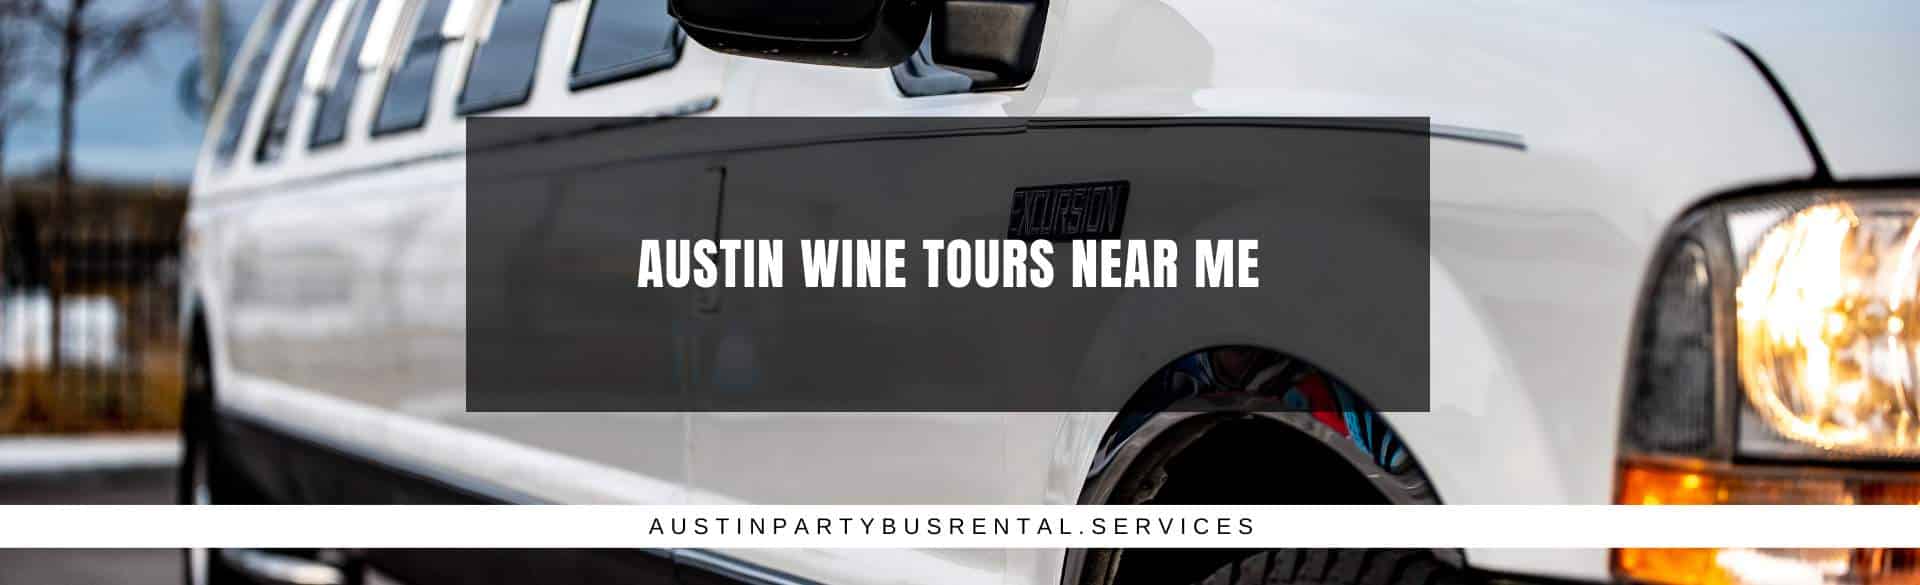 Austin Wine Tours